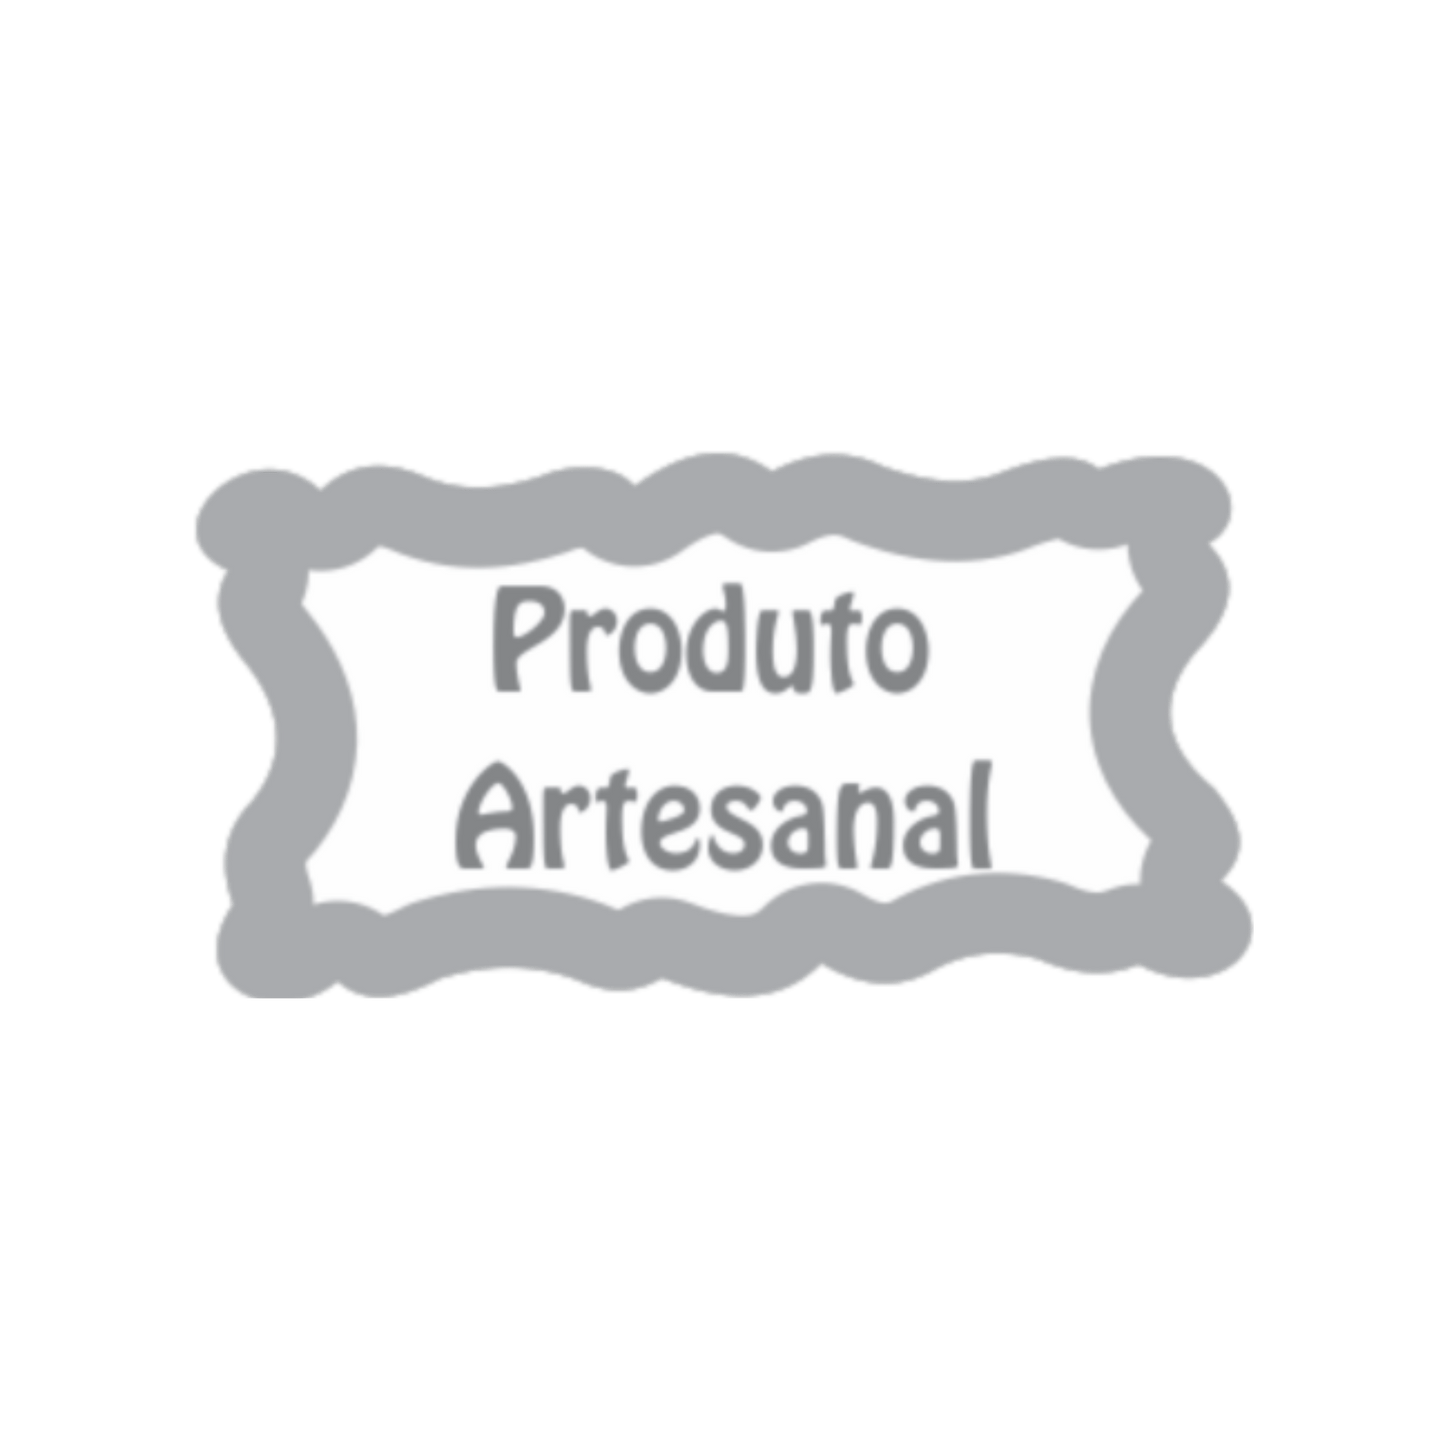 Comemoratio Etiqueta Produto Artesanal Prata